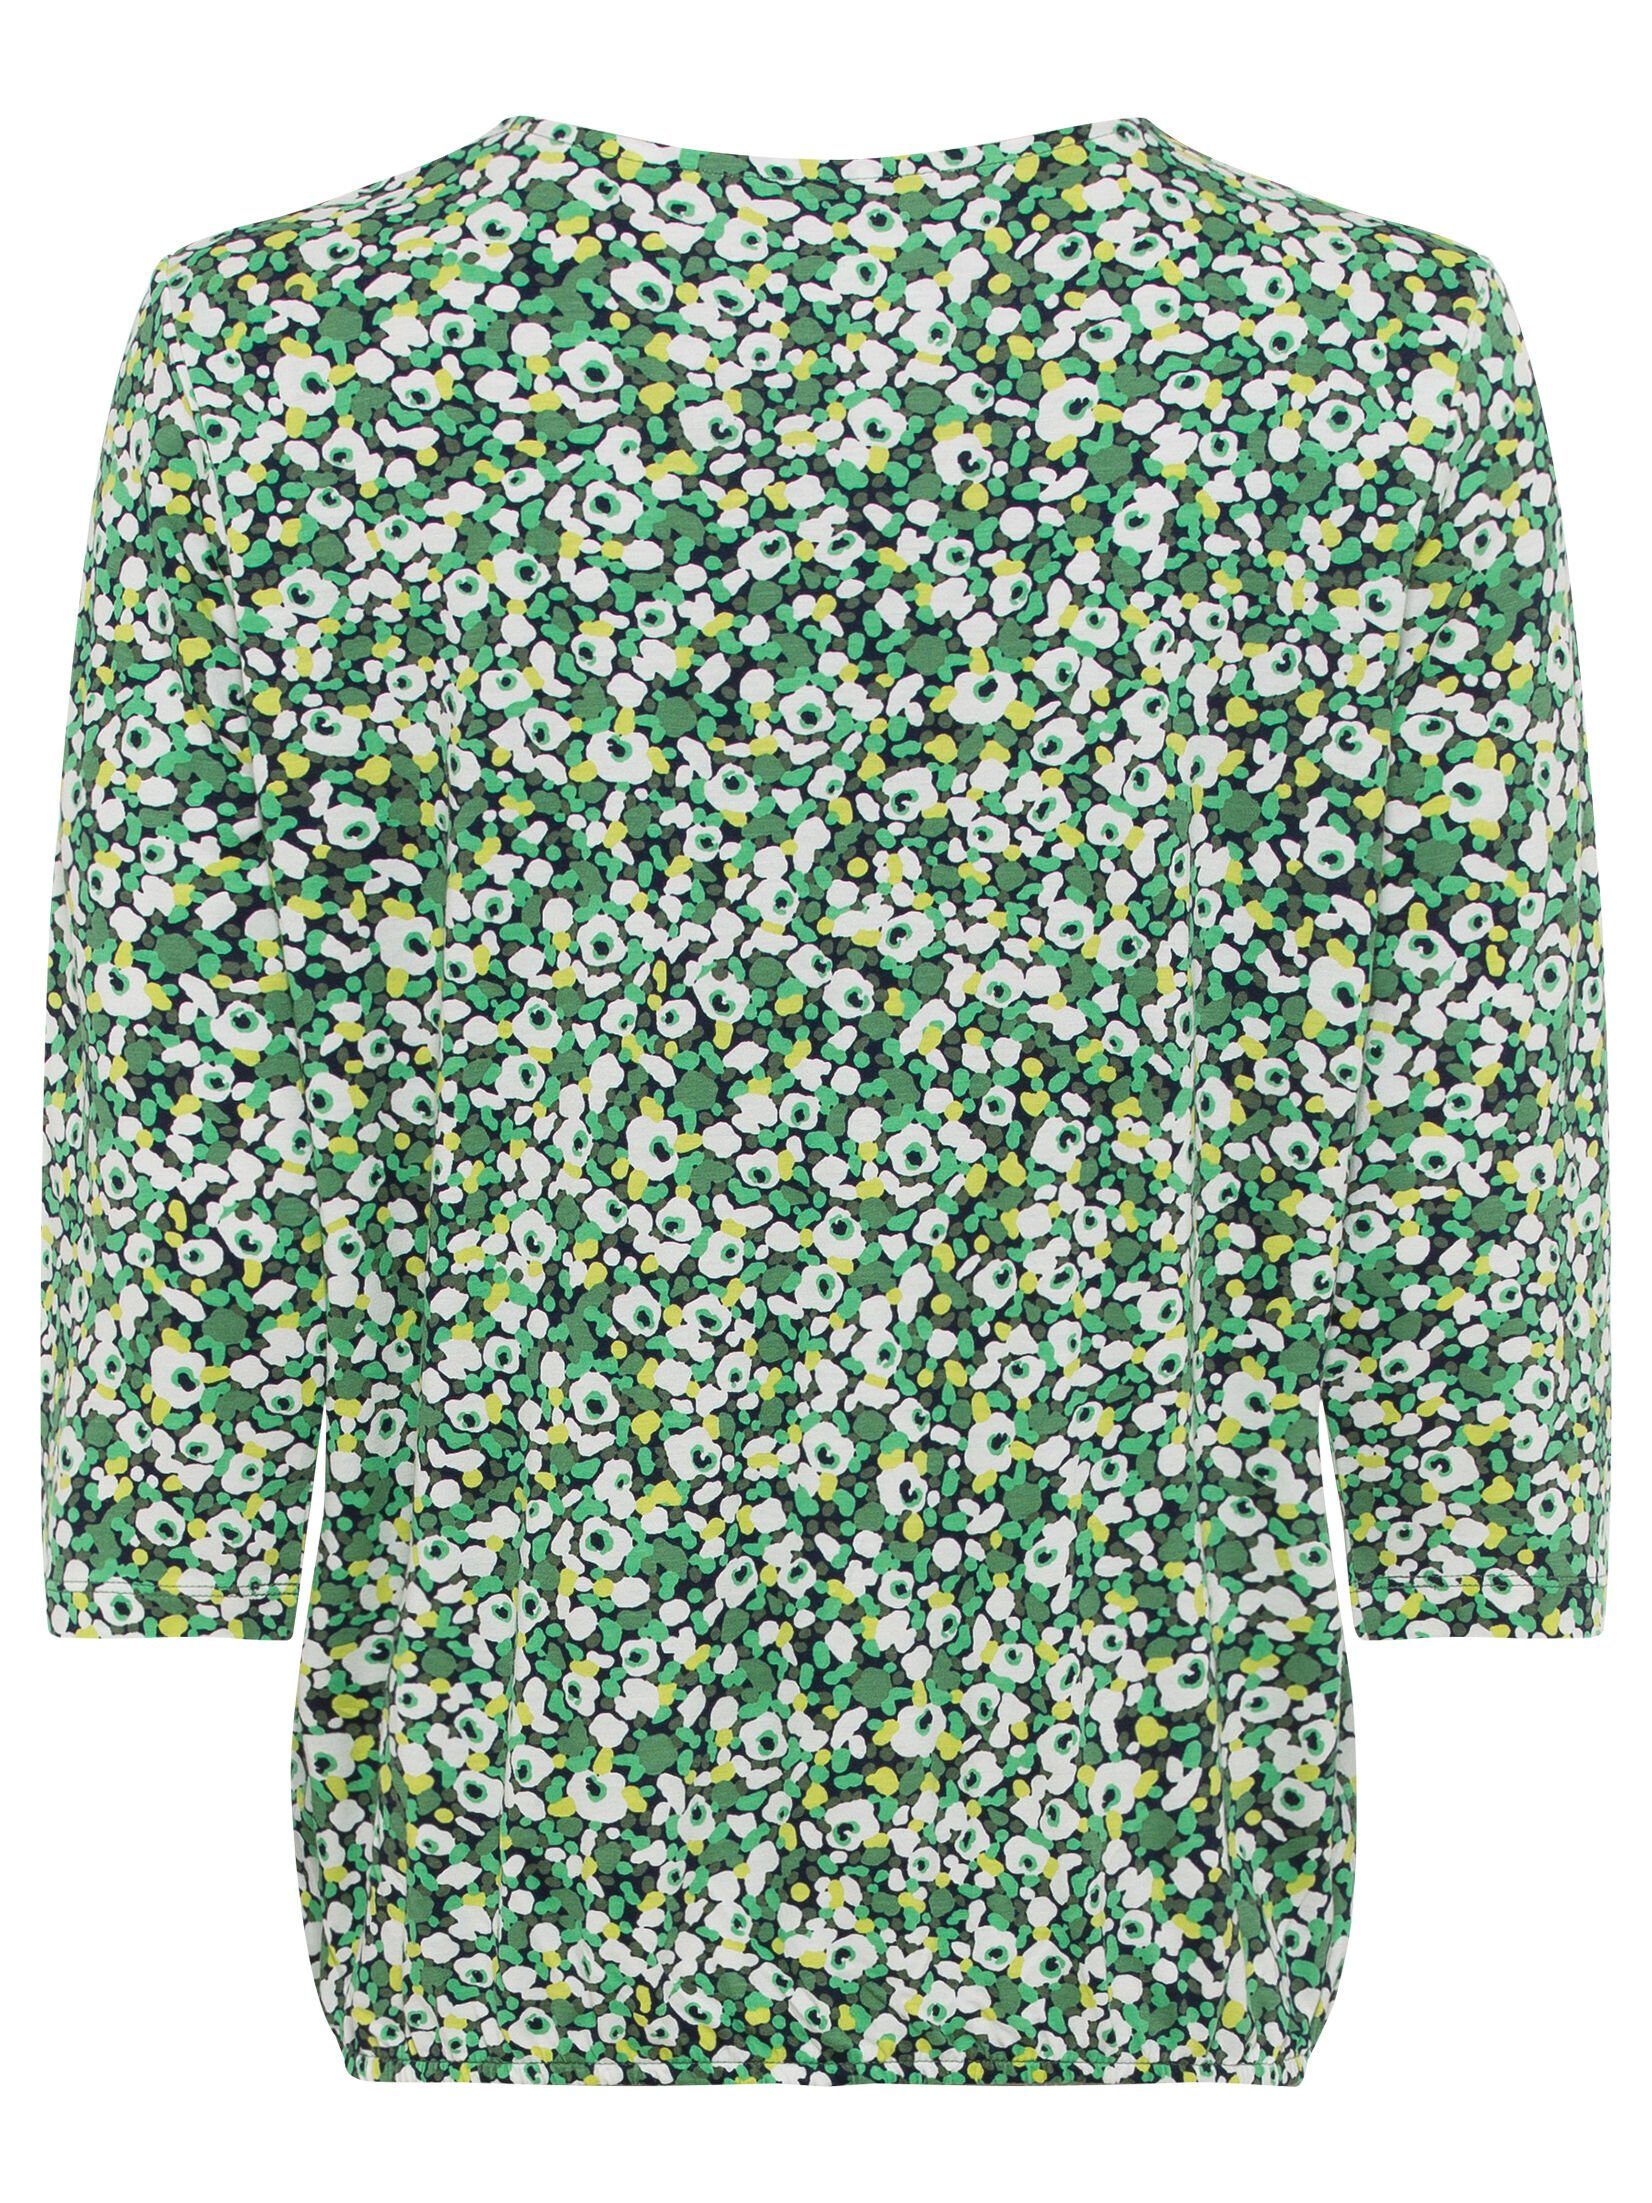 Olsen Print-Shirt mit Blumenprint